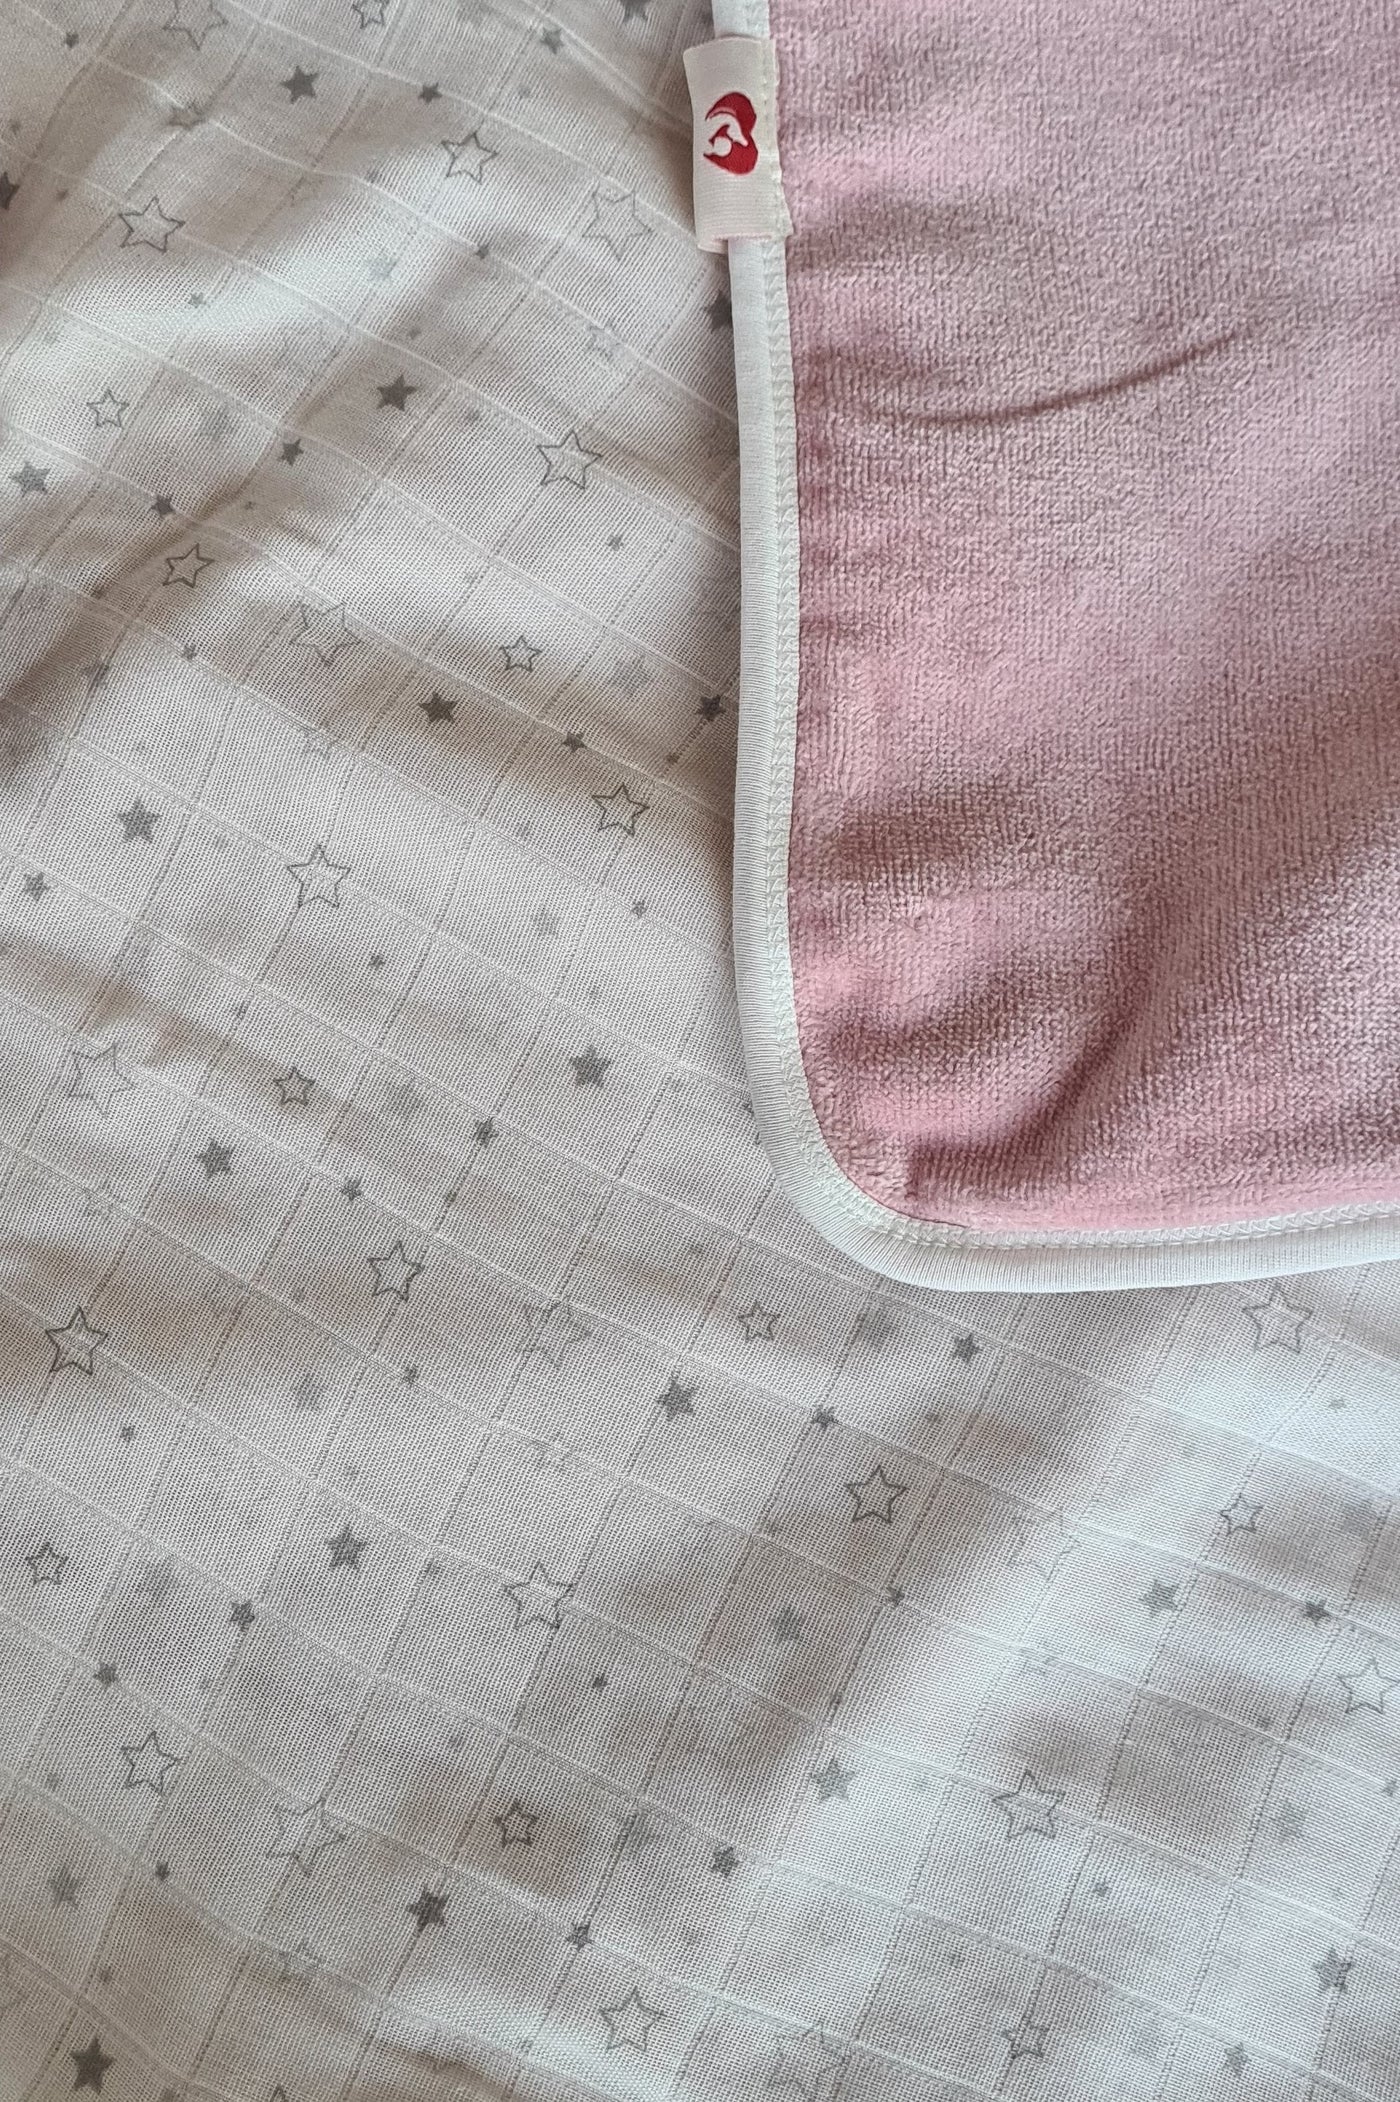 Beberotti Organic Muslin Baby Towel, 75x90 cm